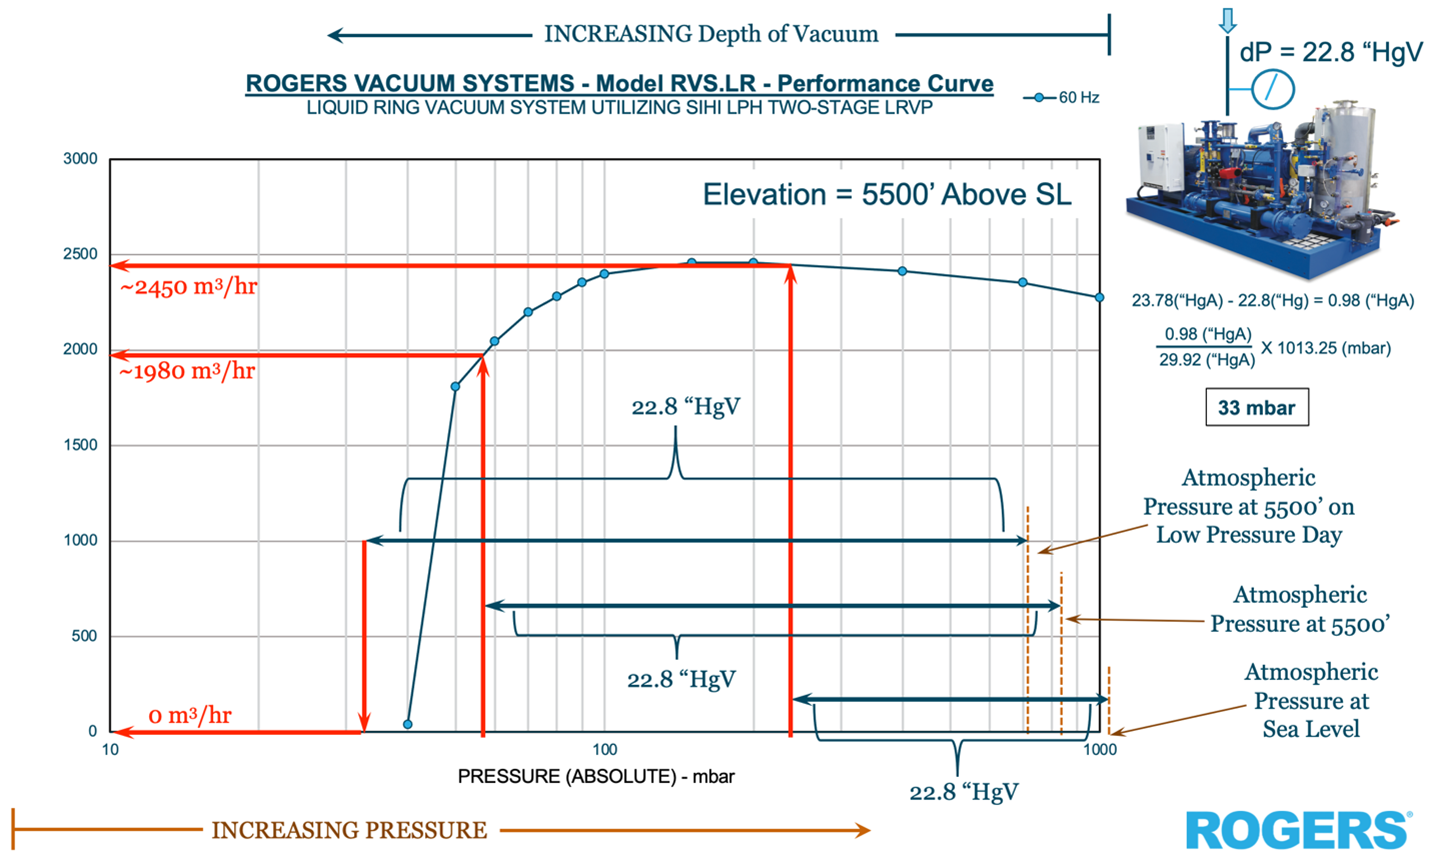 Rogers Vacuum System performance curve